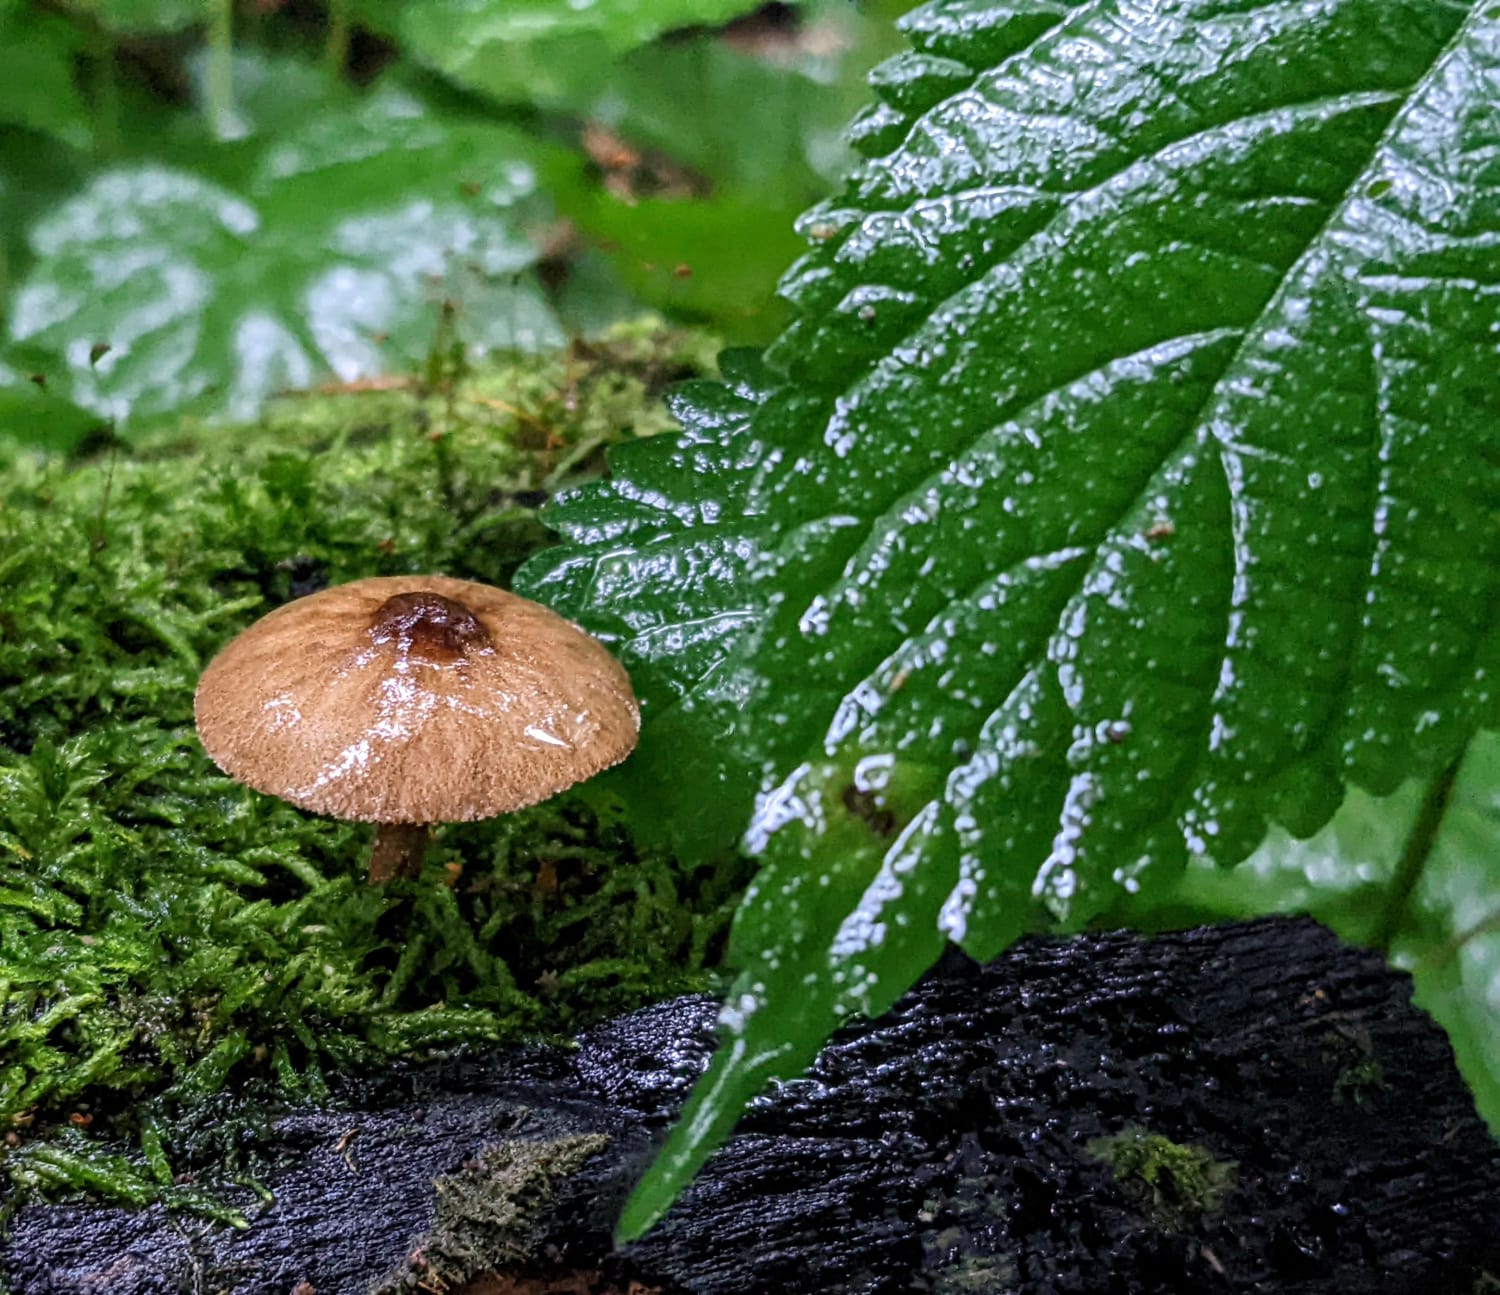 I love to photograph mushrooms when it's raining